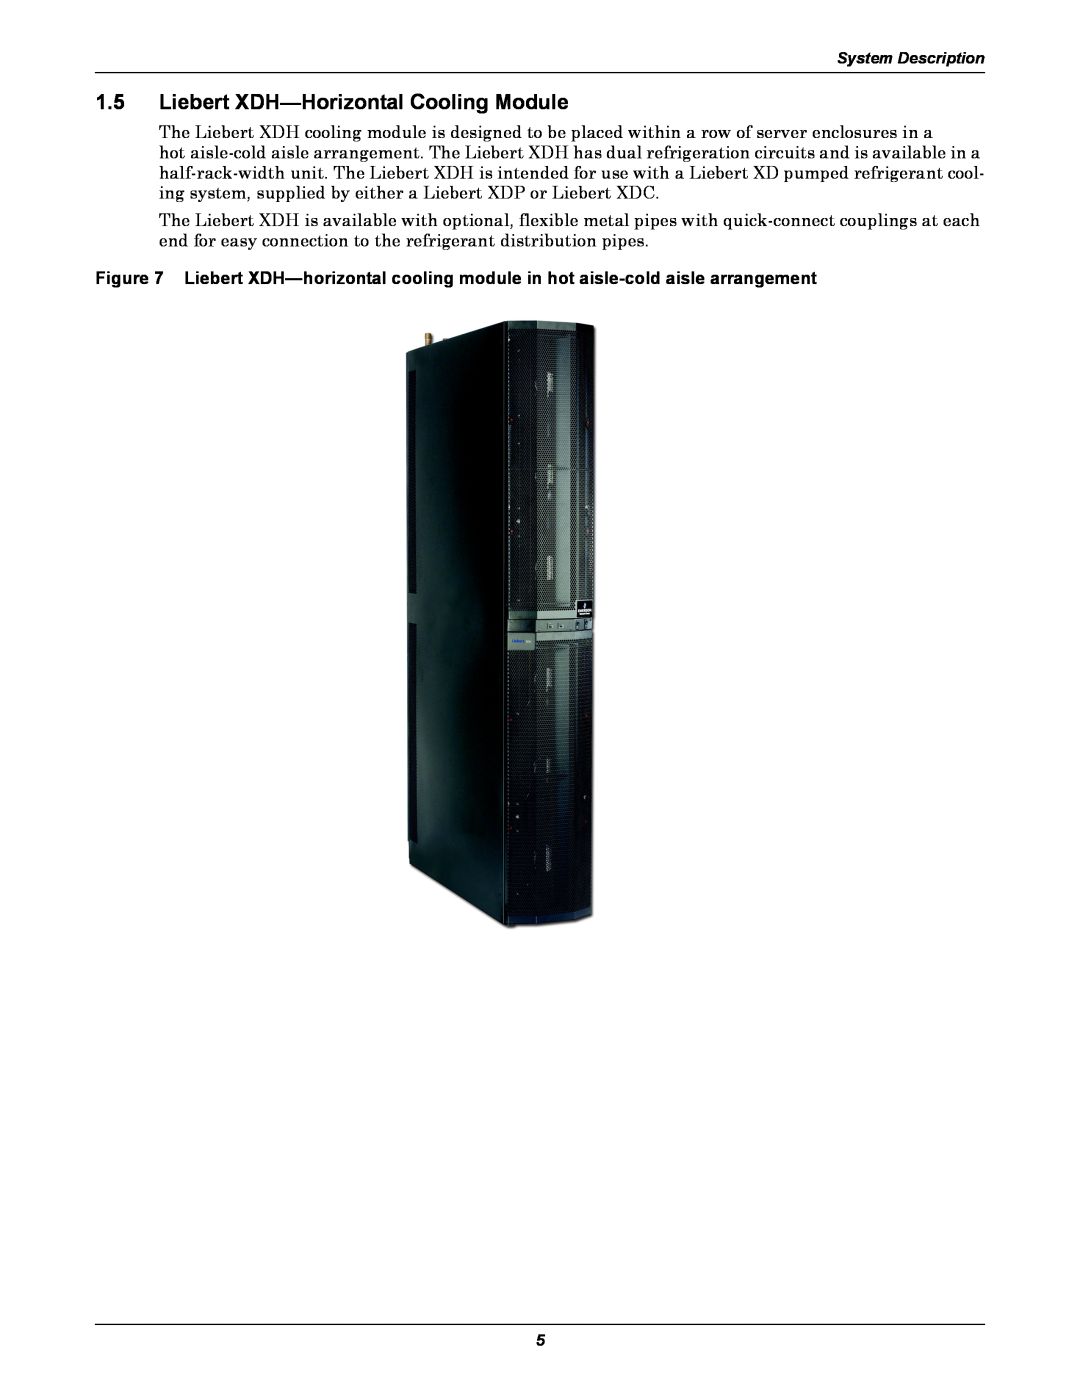 Emerson Xtreme Density manual Liebert XDH-Horizontal Cooling Module 